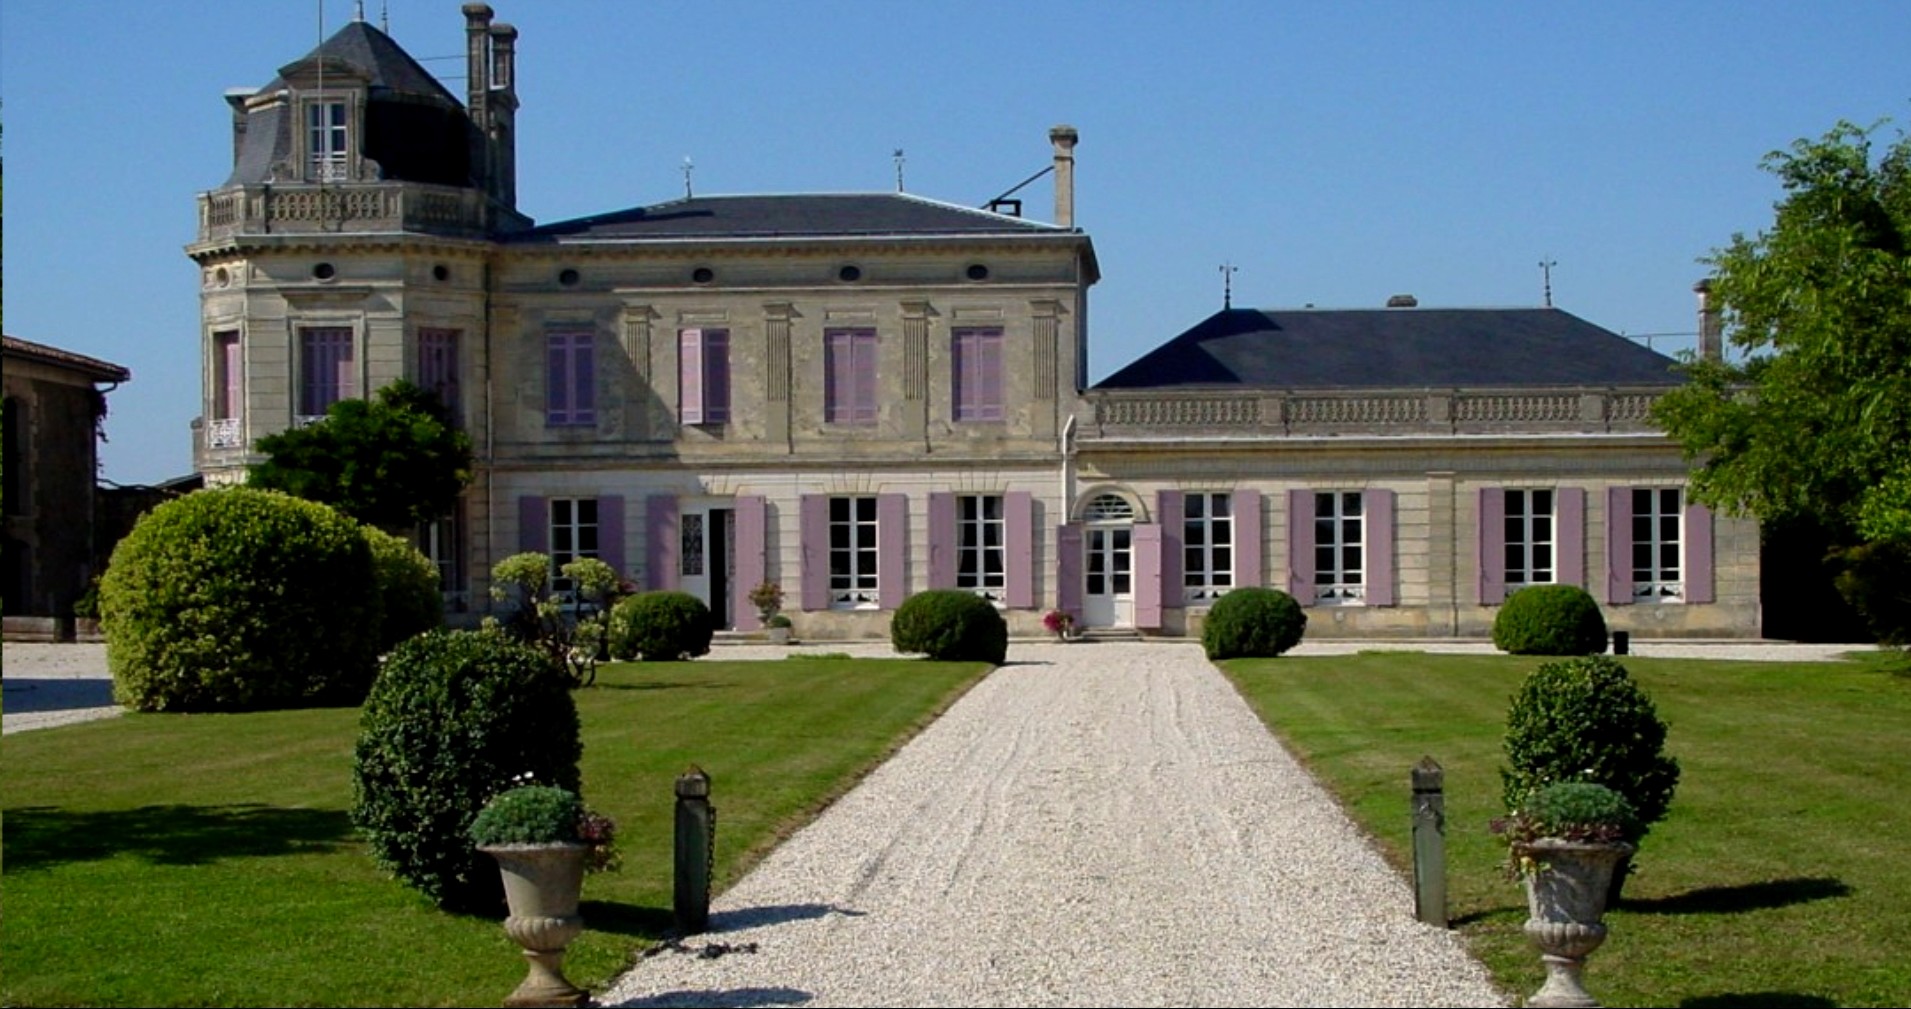 Château Chasse-Spleen